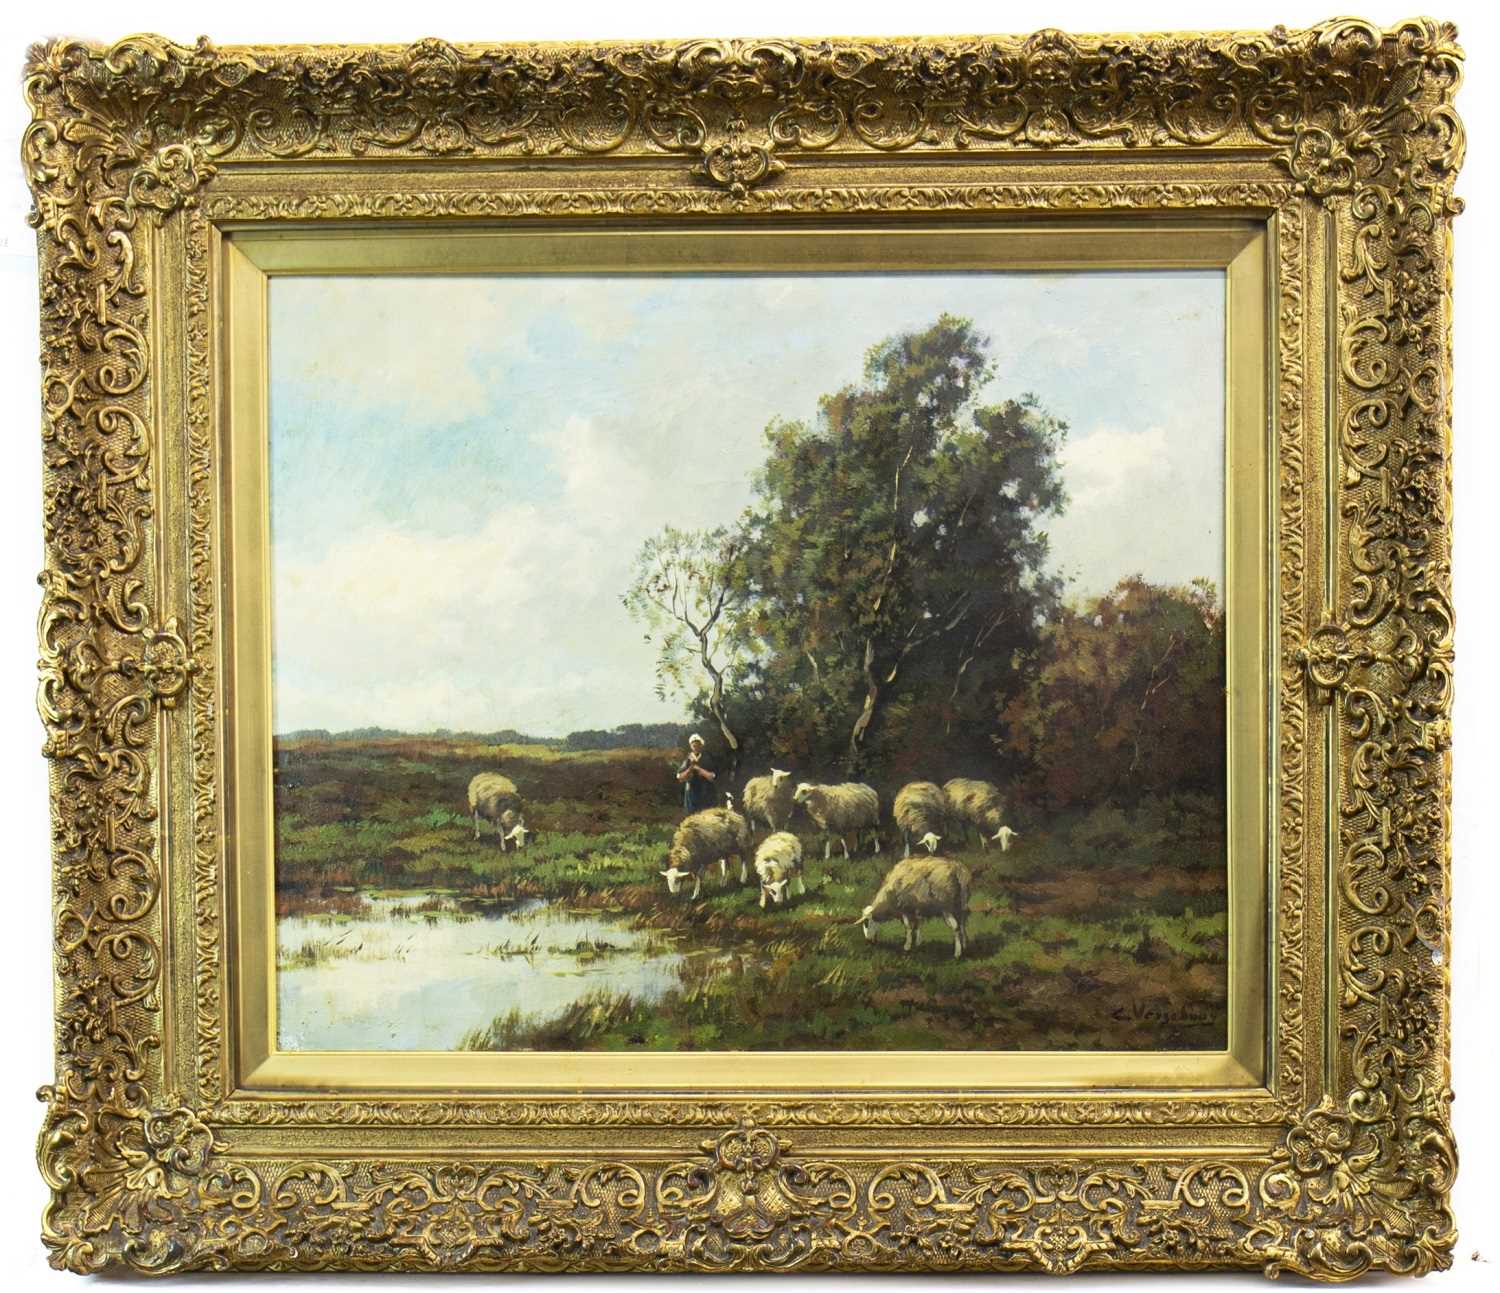 Lot 417 - SHEEP WATERING BY WOODLANDS, AN OIL BY CHARLES VERSCHUUREN